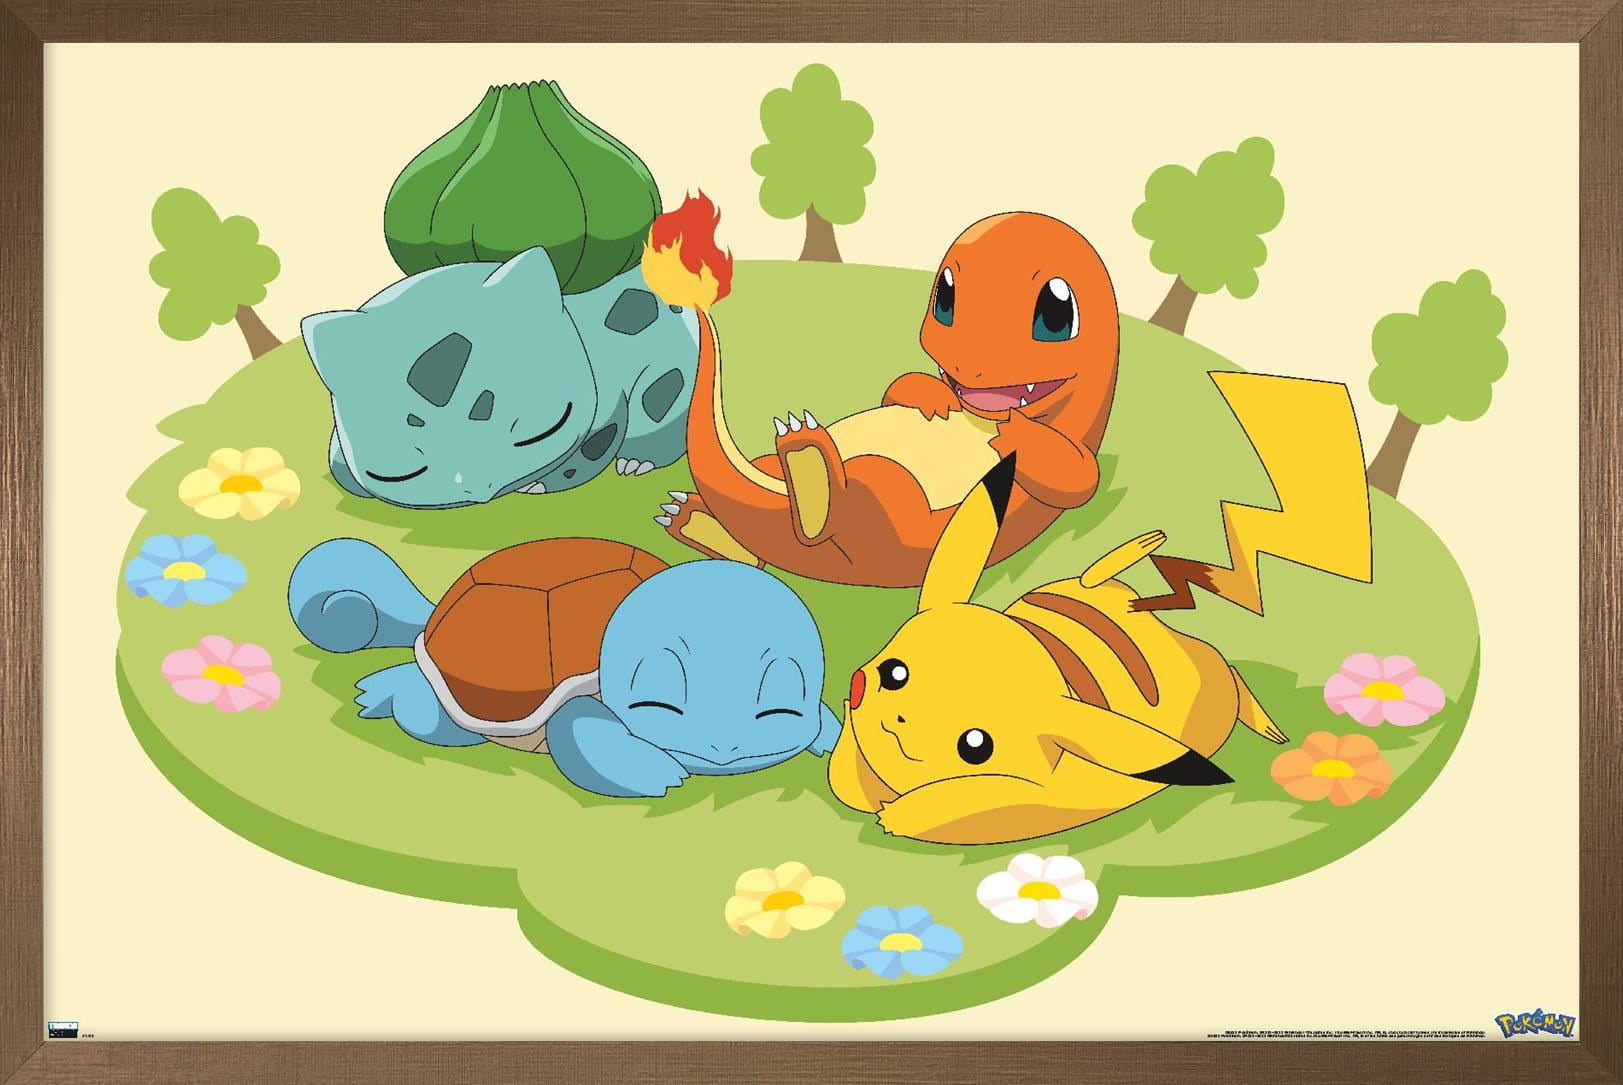 Pokémon - Pikachu and Kanto First Partner Pokémon Wall Poster, 22.375